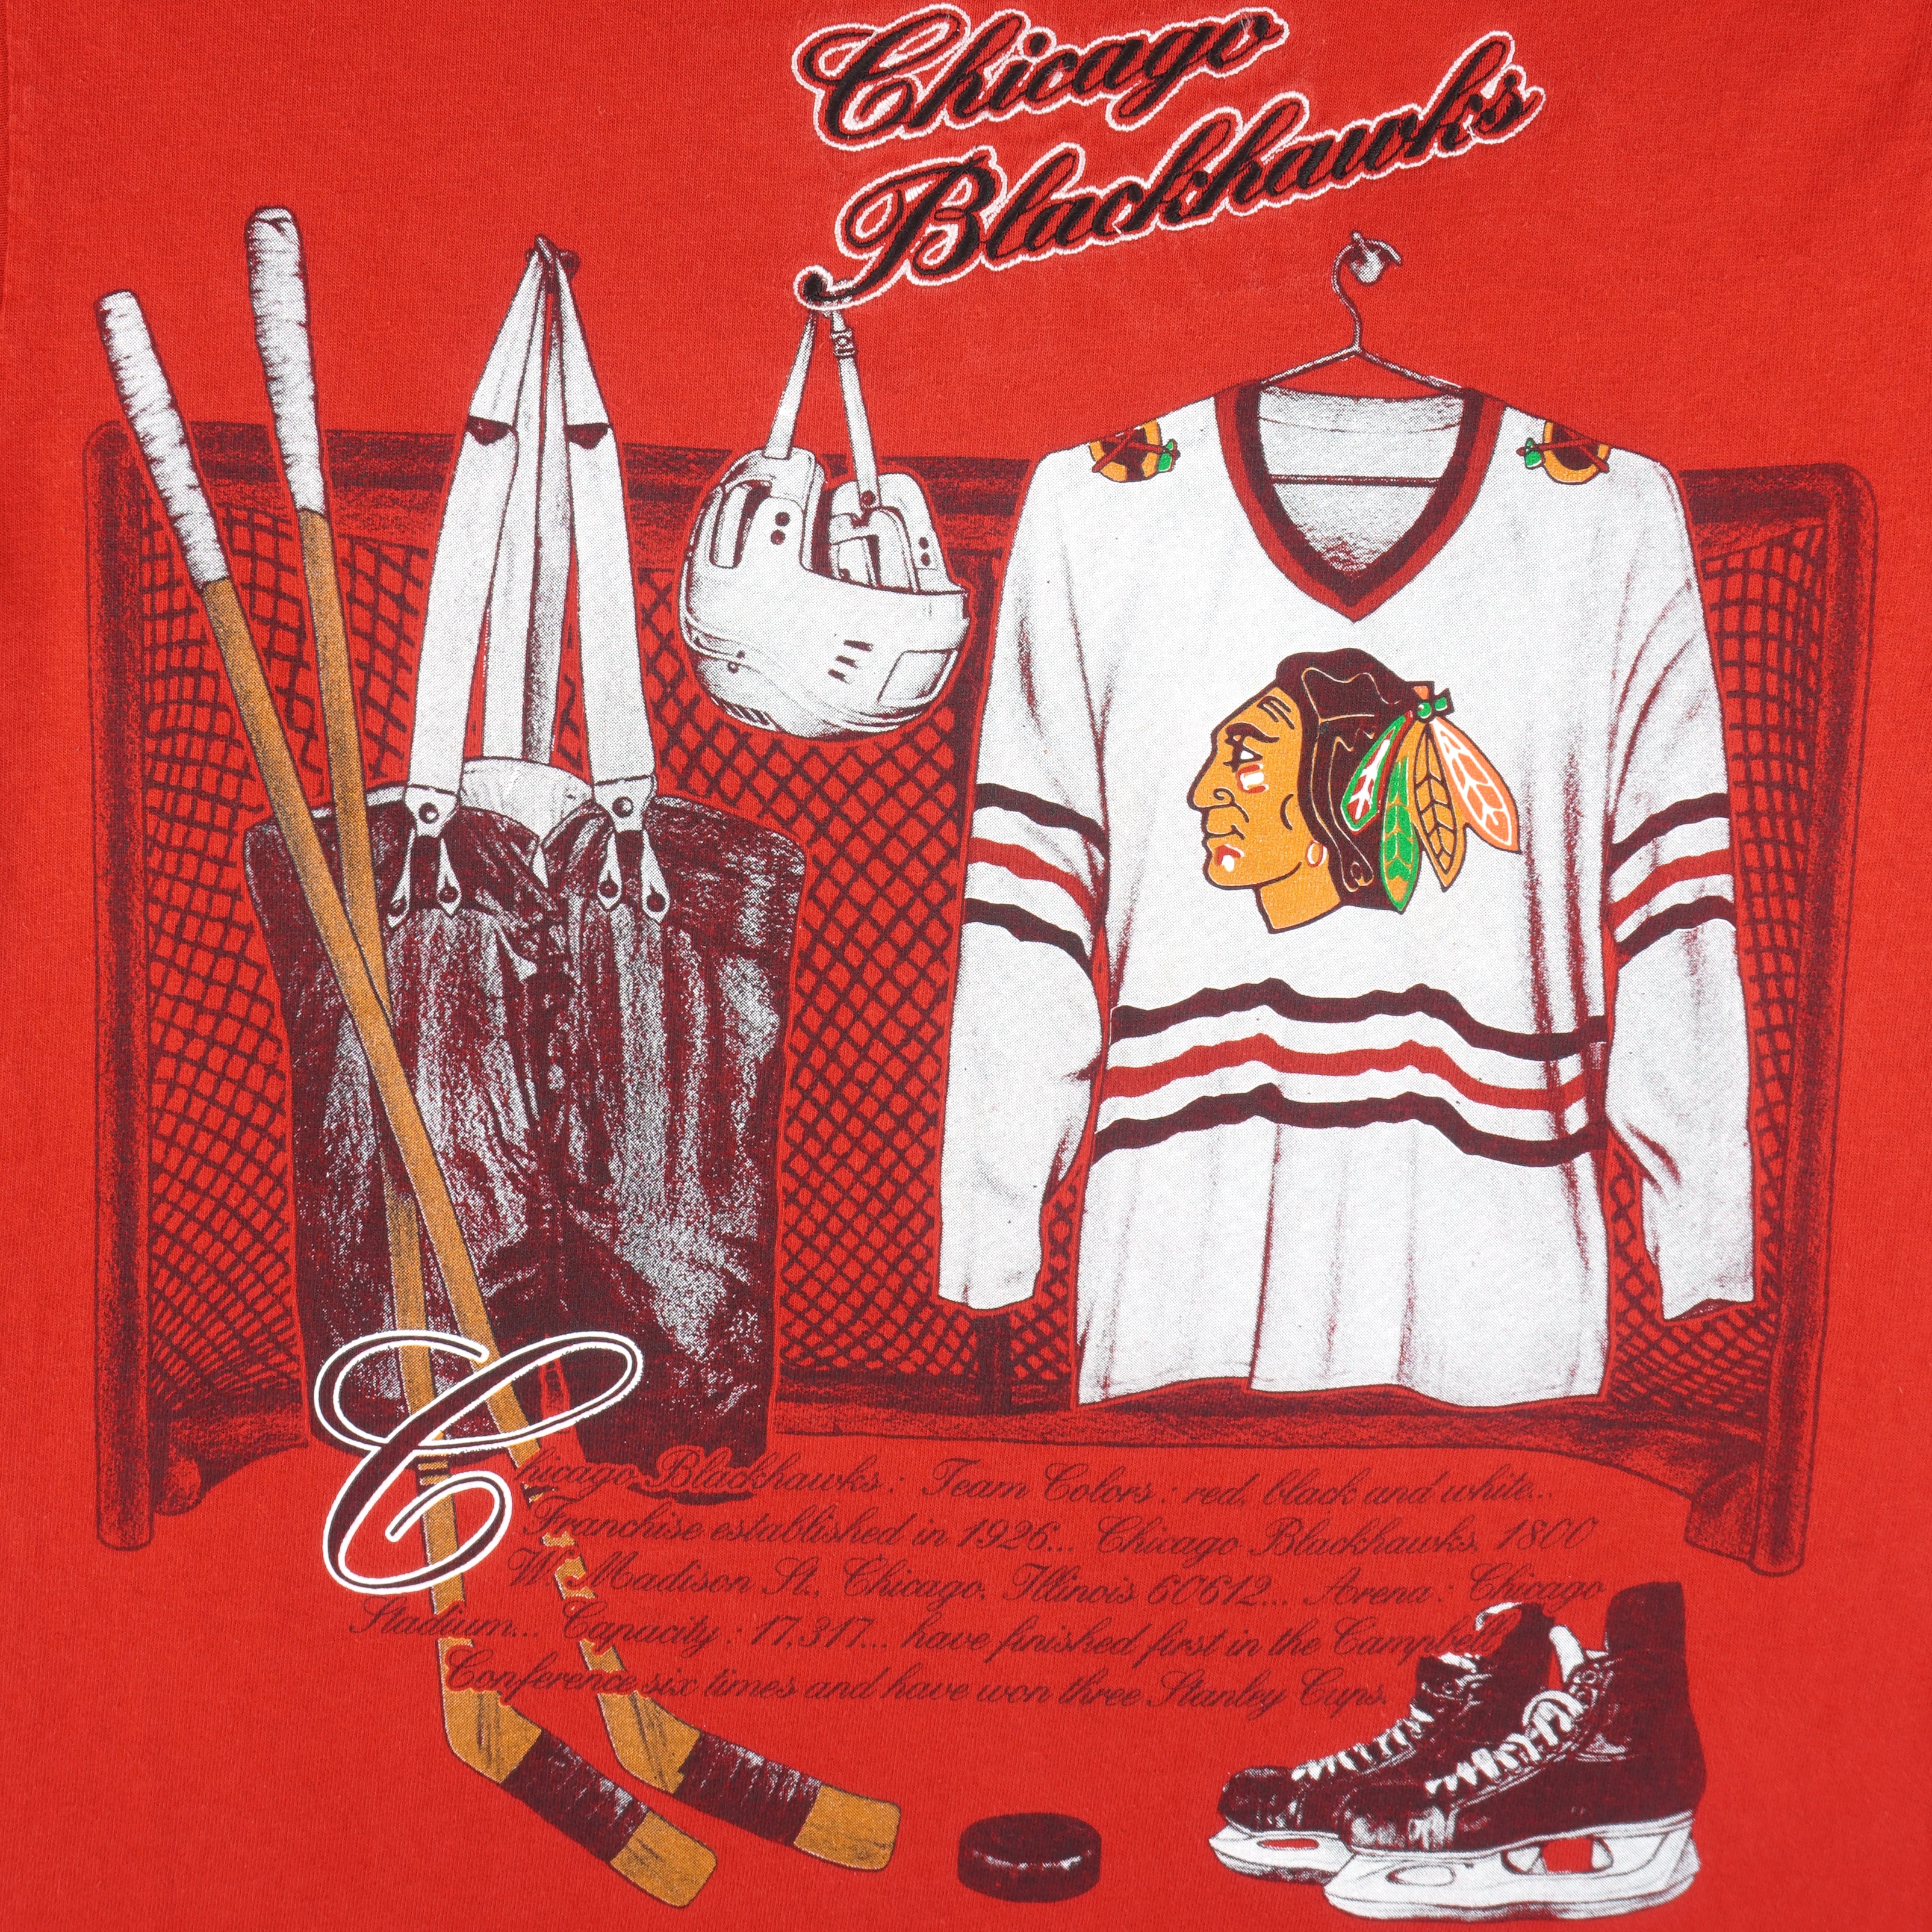 NHL Hockey Chicago Blackhawks Cool Snoopy Shirt T Shirt